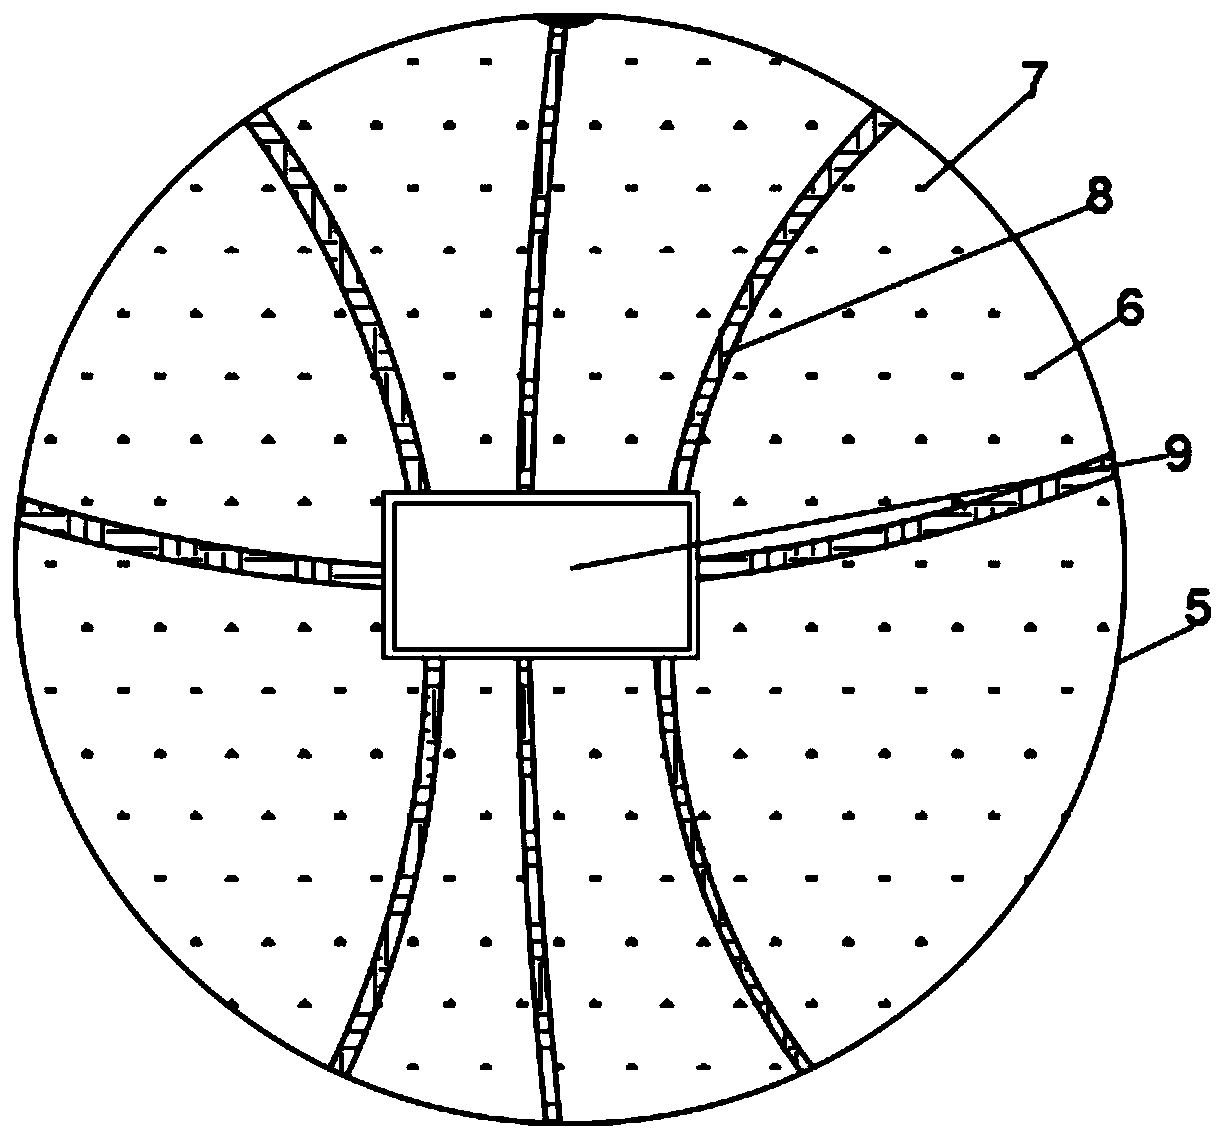 Novel basketball structure